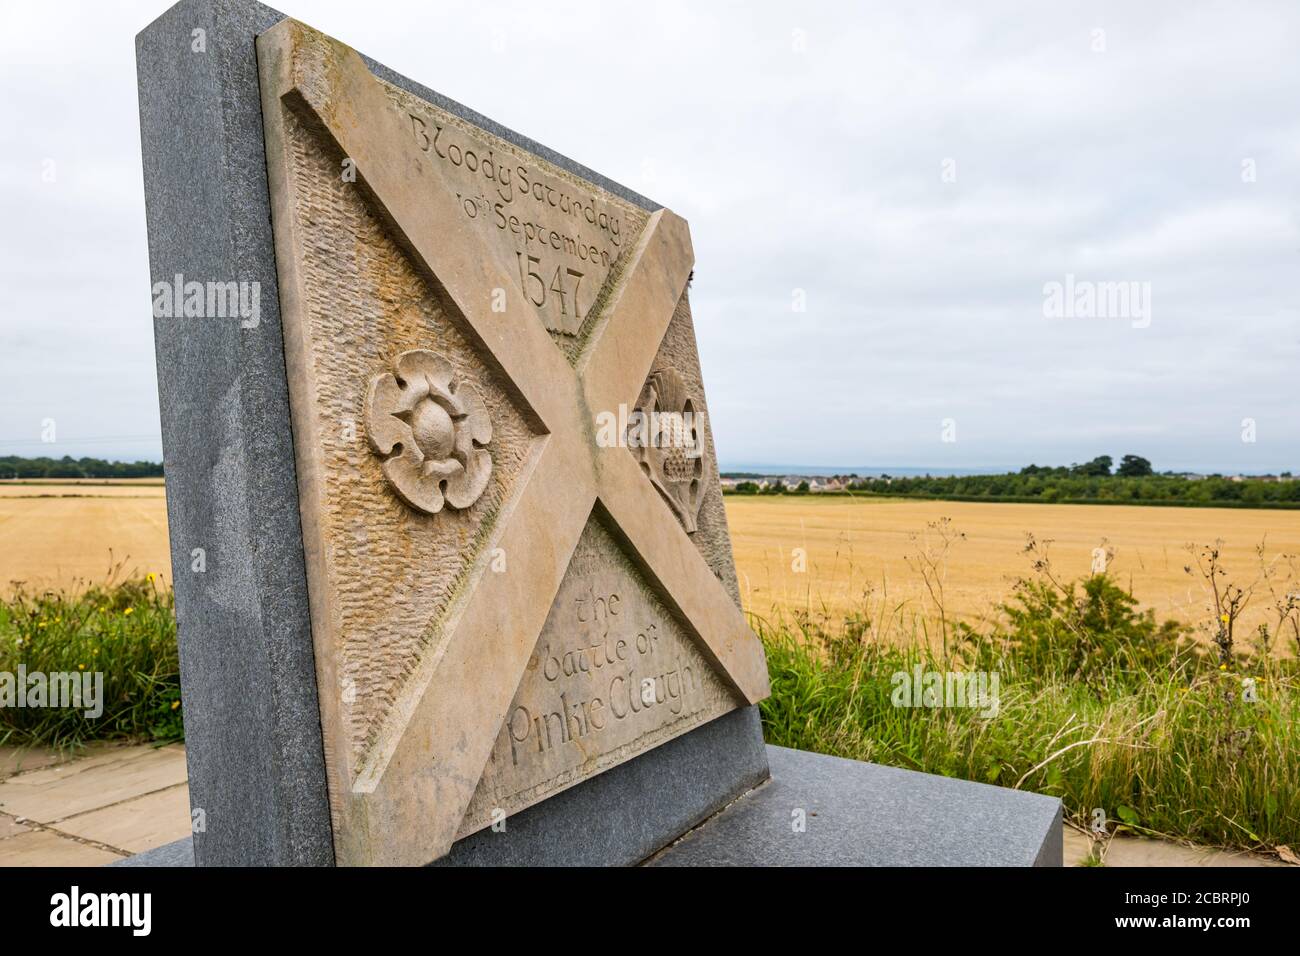 16th century Scots English Battle of Pinkie Cleugh memorial stone, Wallyford, East Lothian, Scotland, UK Stock Photo